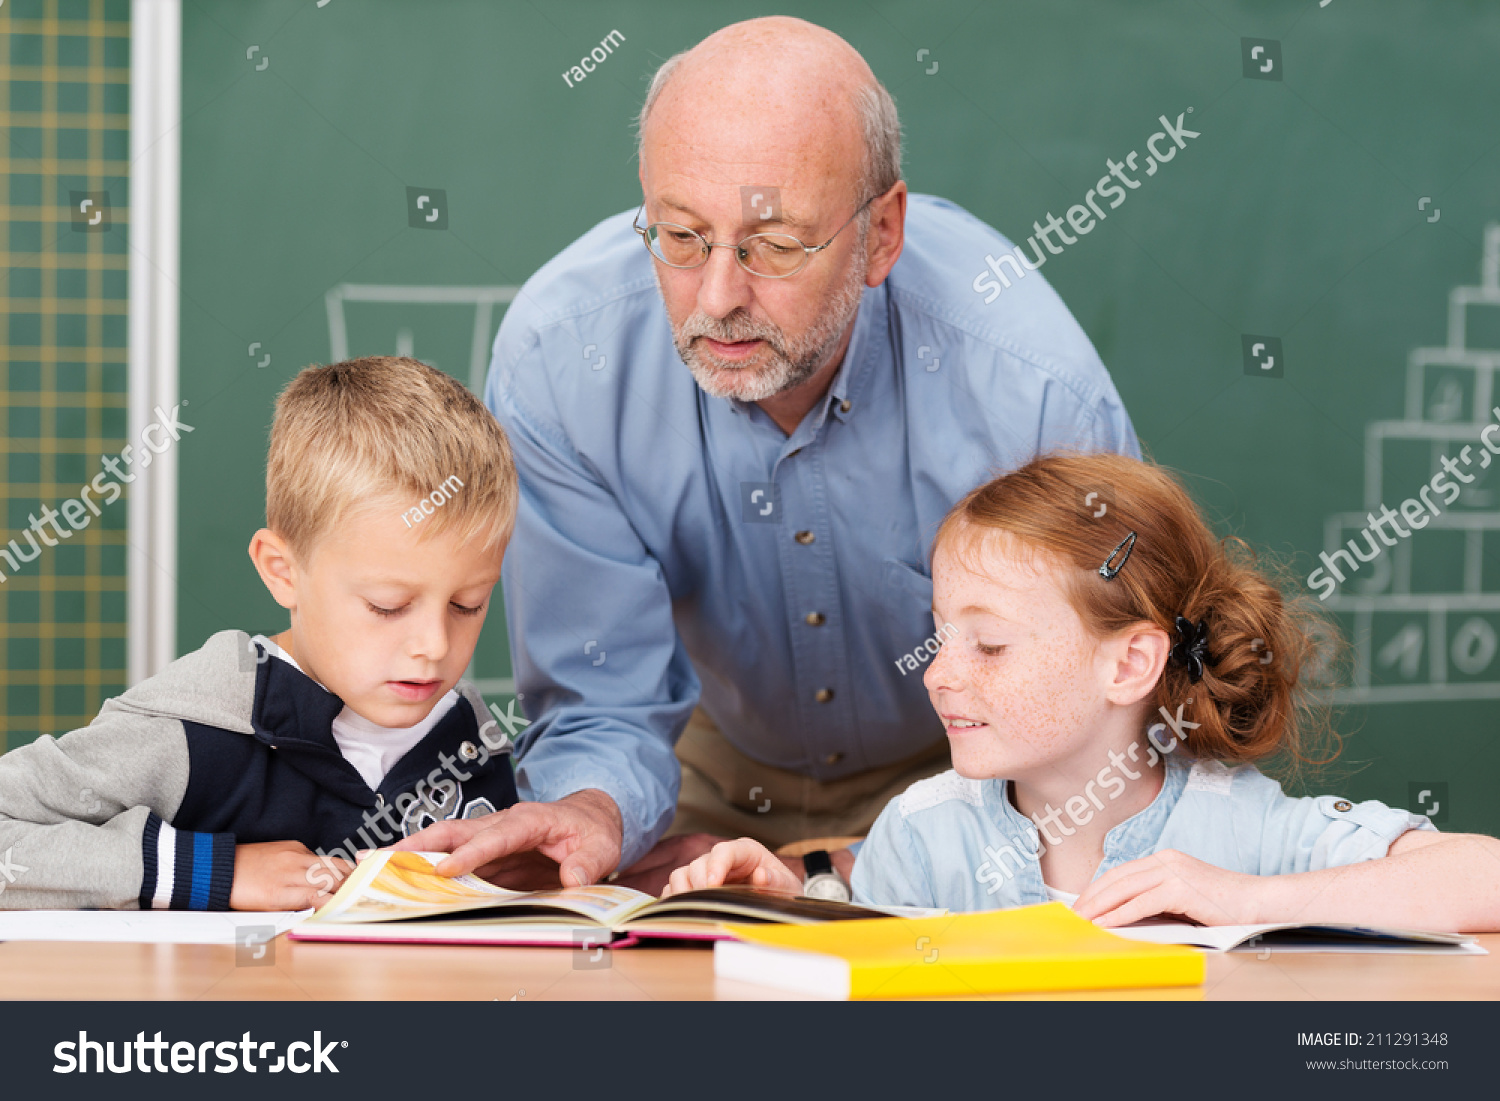 The teacher and a small girl